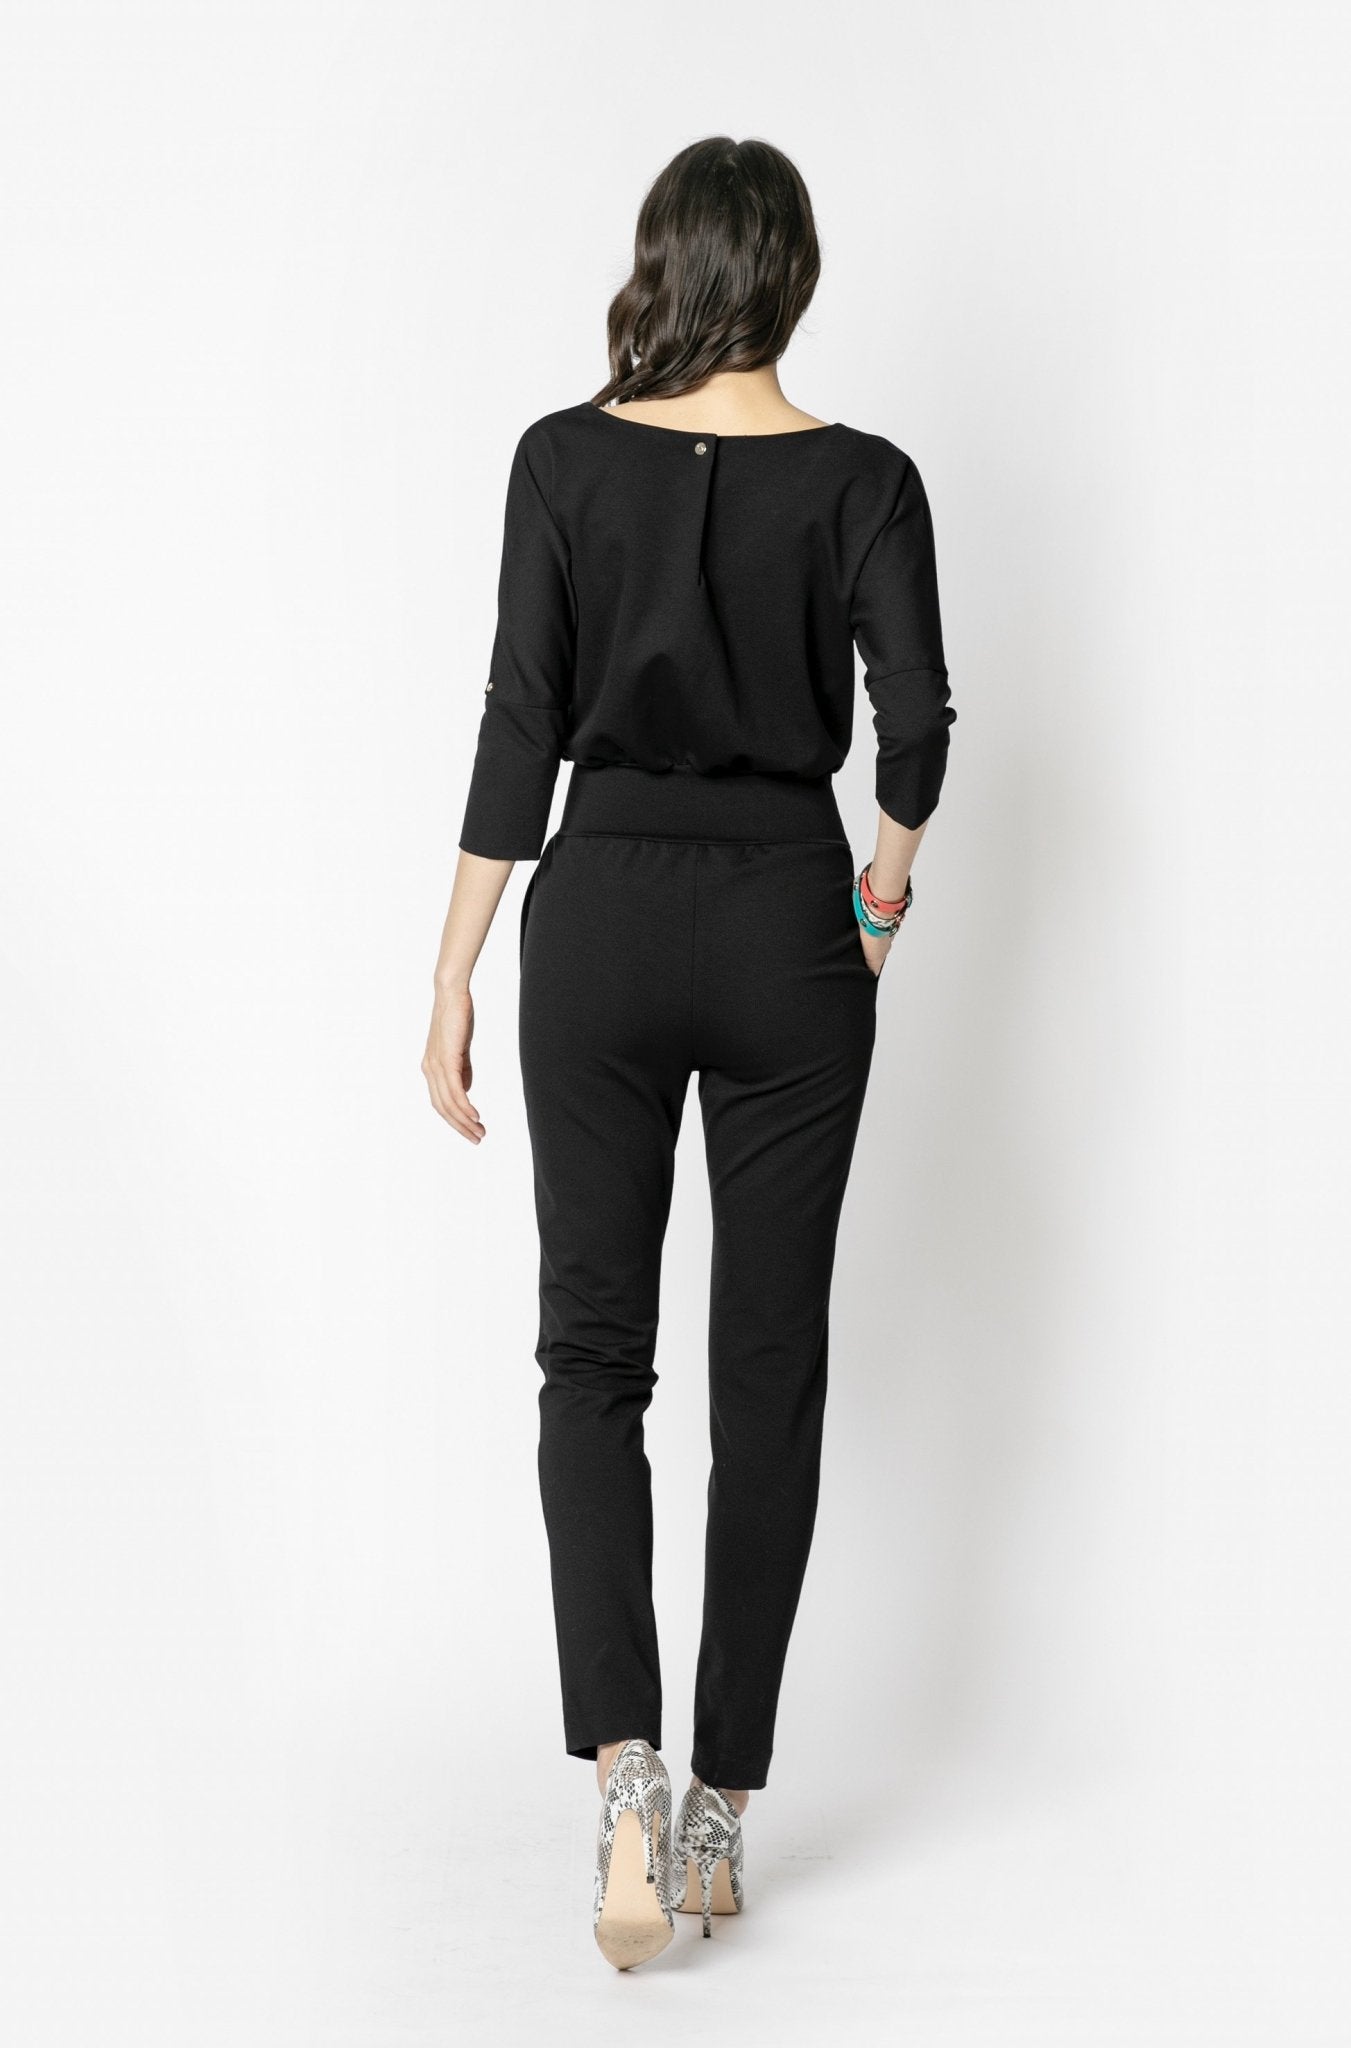 melrose-overal-konyekig-ero-ujjal-fekete-ew-essential-wardrobe-kapszularuhatar-webshop